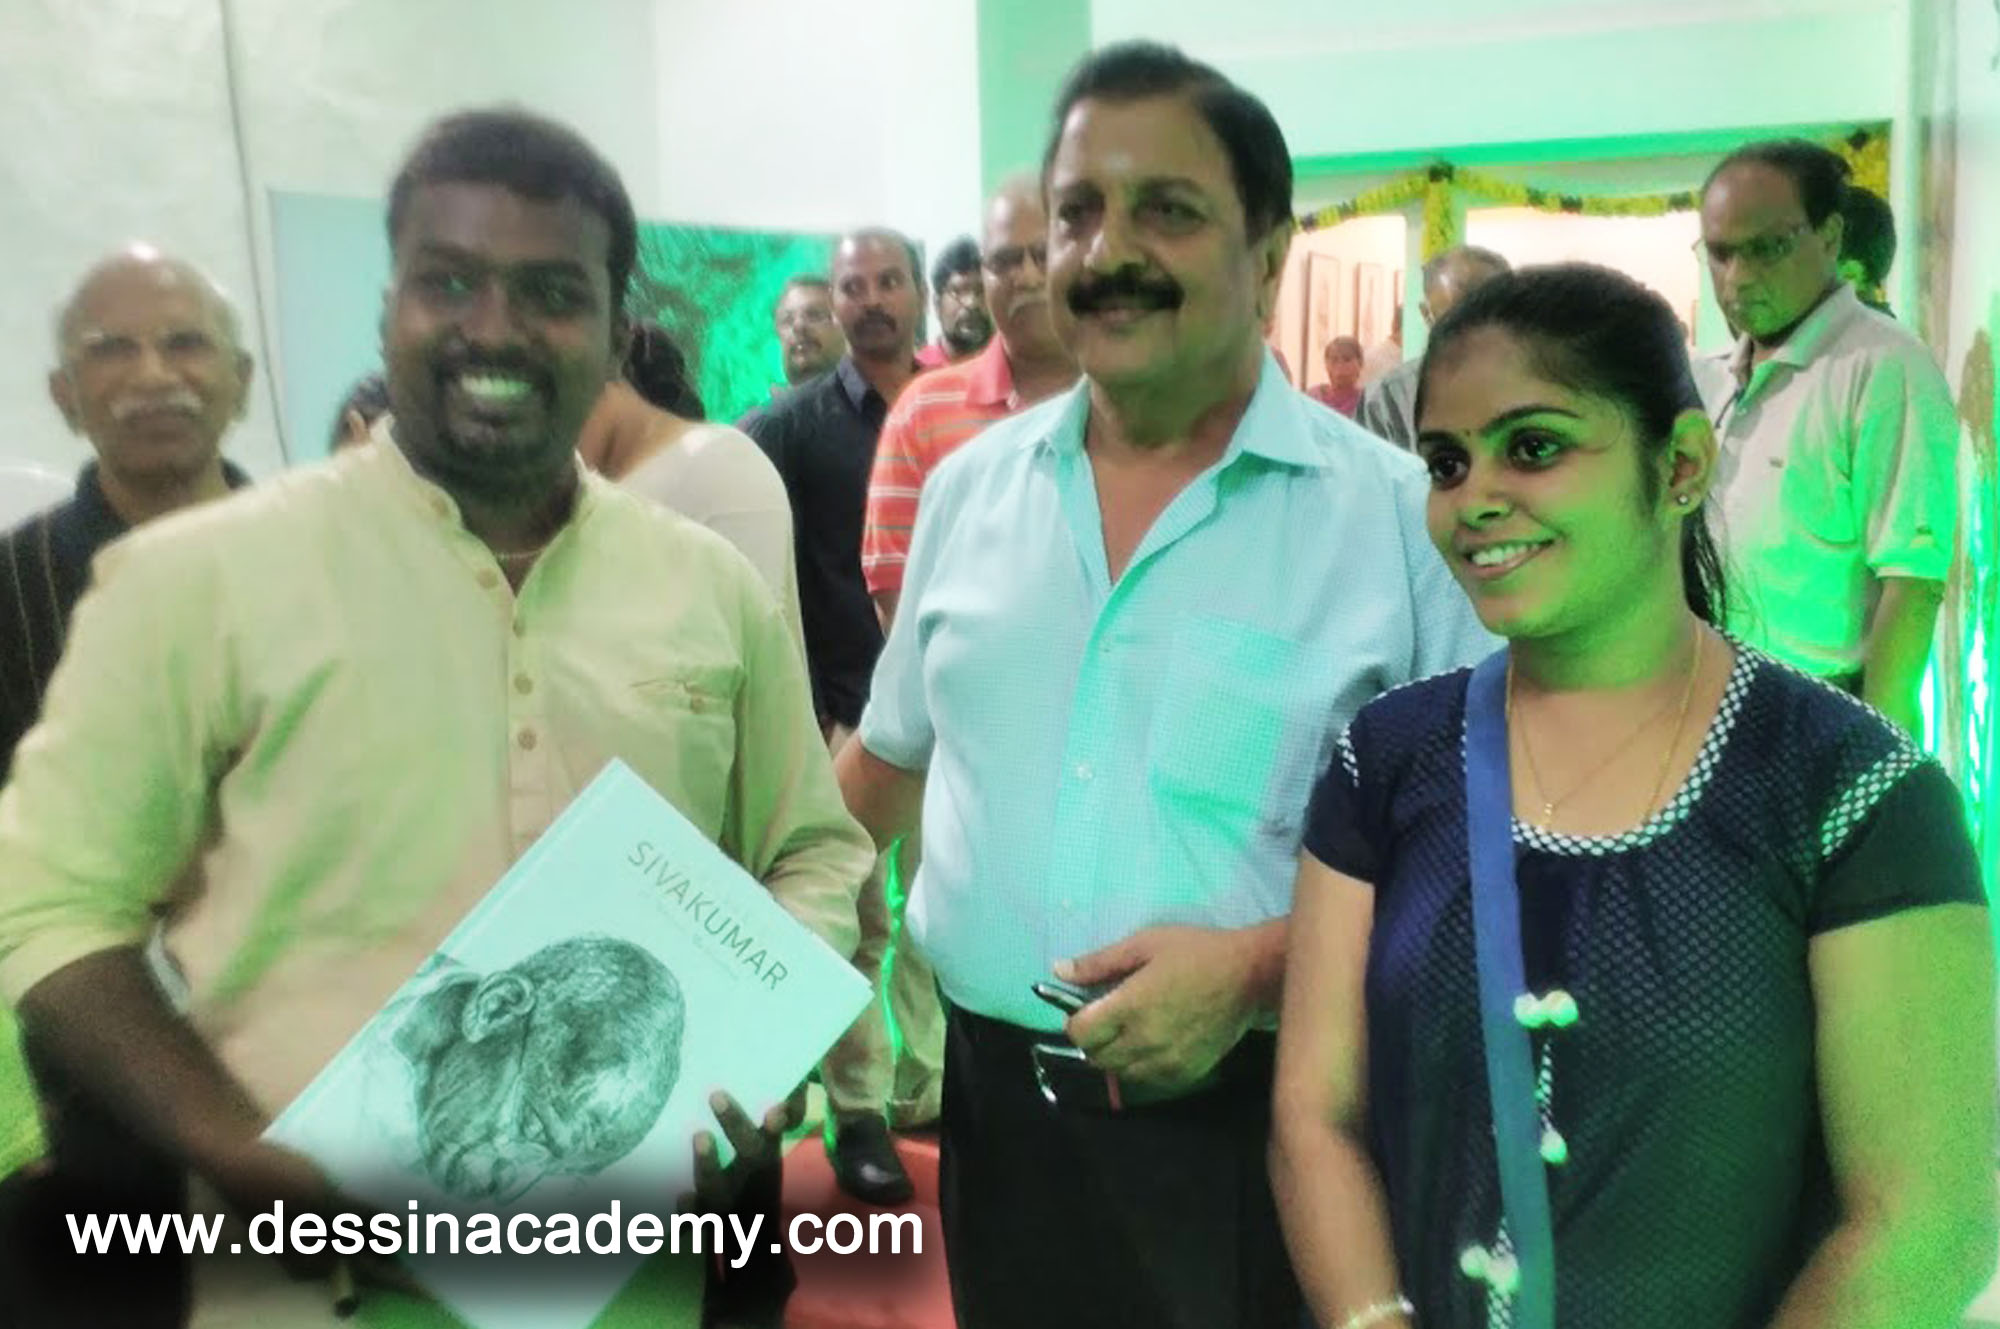 Dessin School of Arts Event Gallery 4,  in IndiaDessin Academy